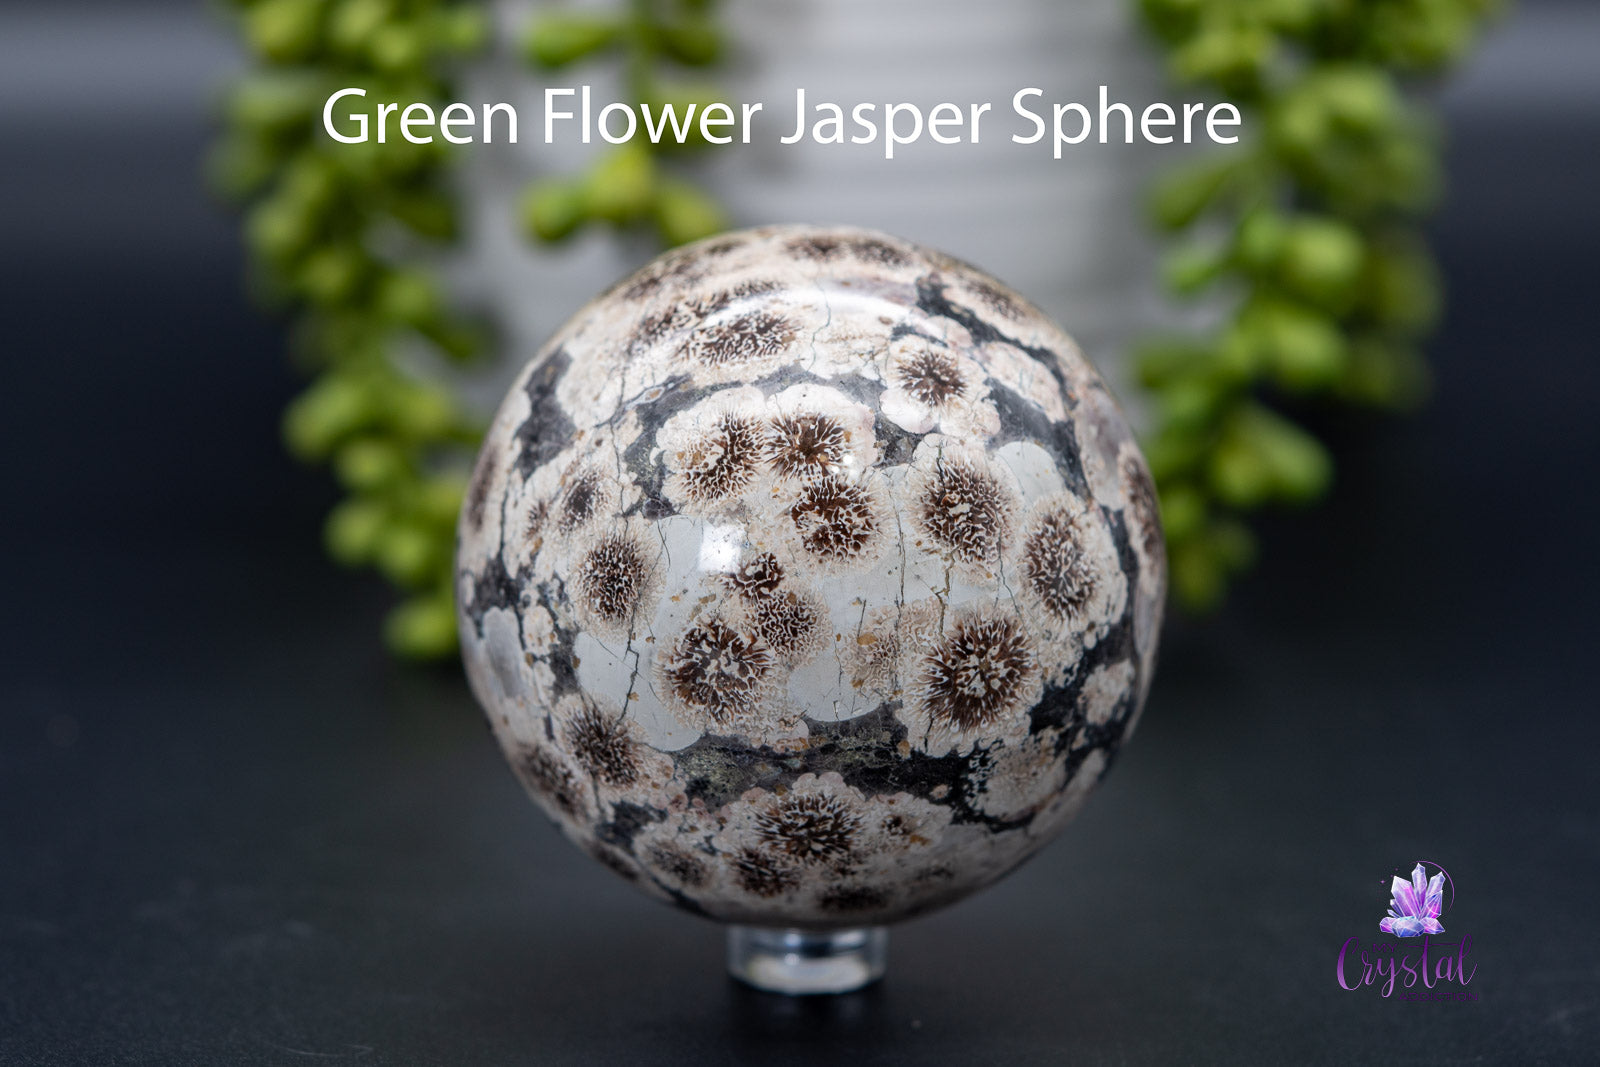 Green Flower Jasper Sphere 2.8"/72mm - My Crystal Addiction